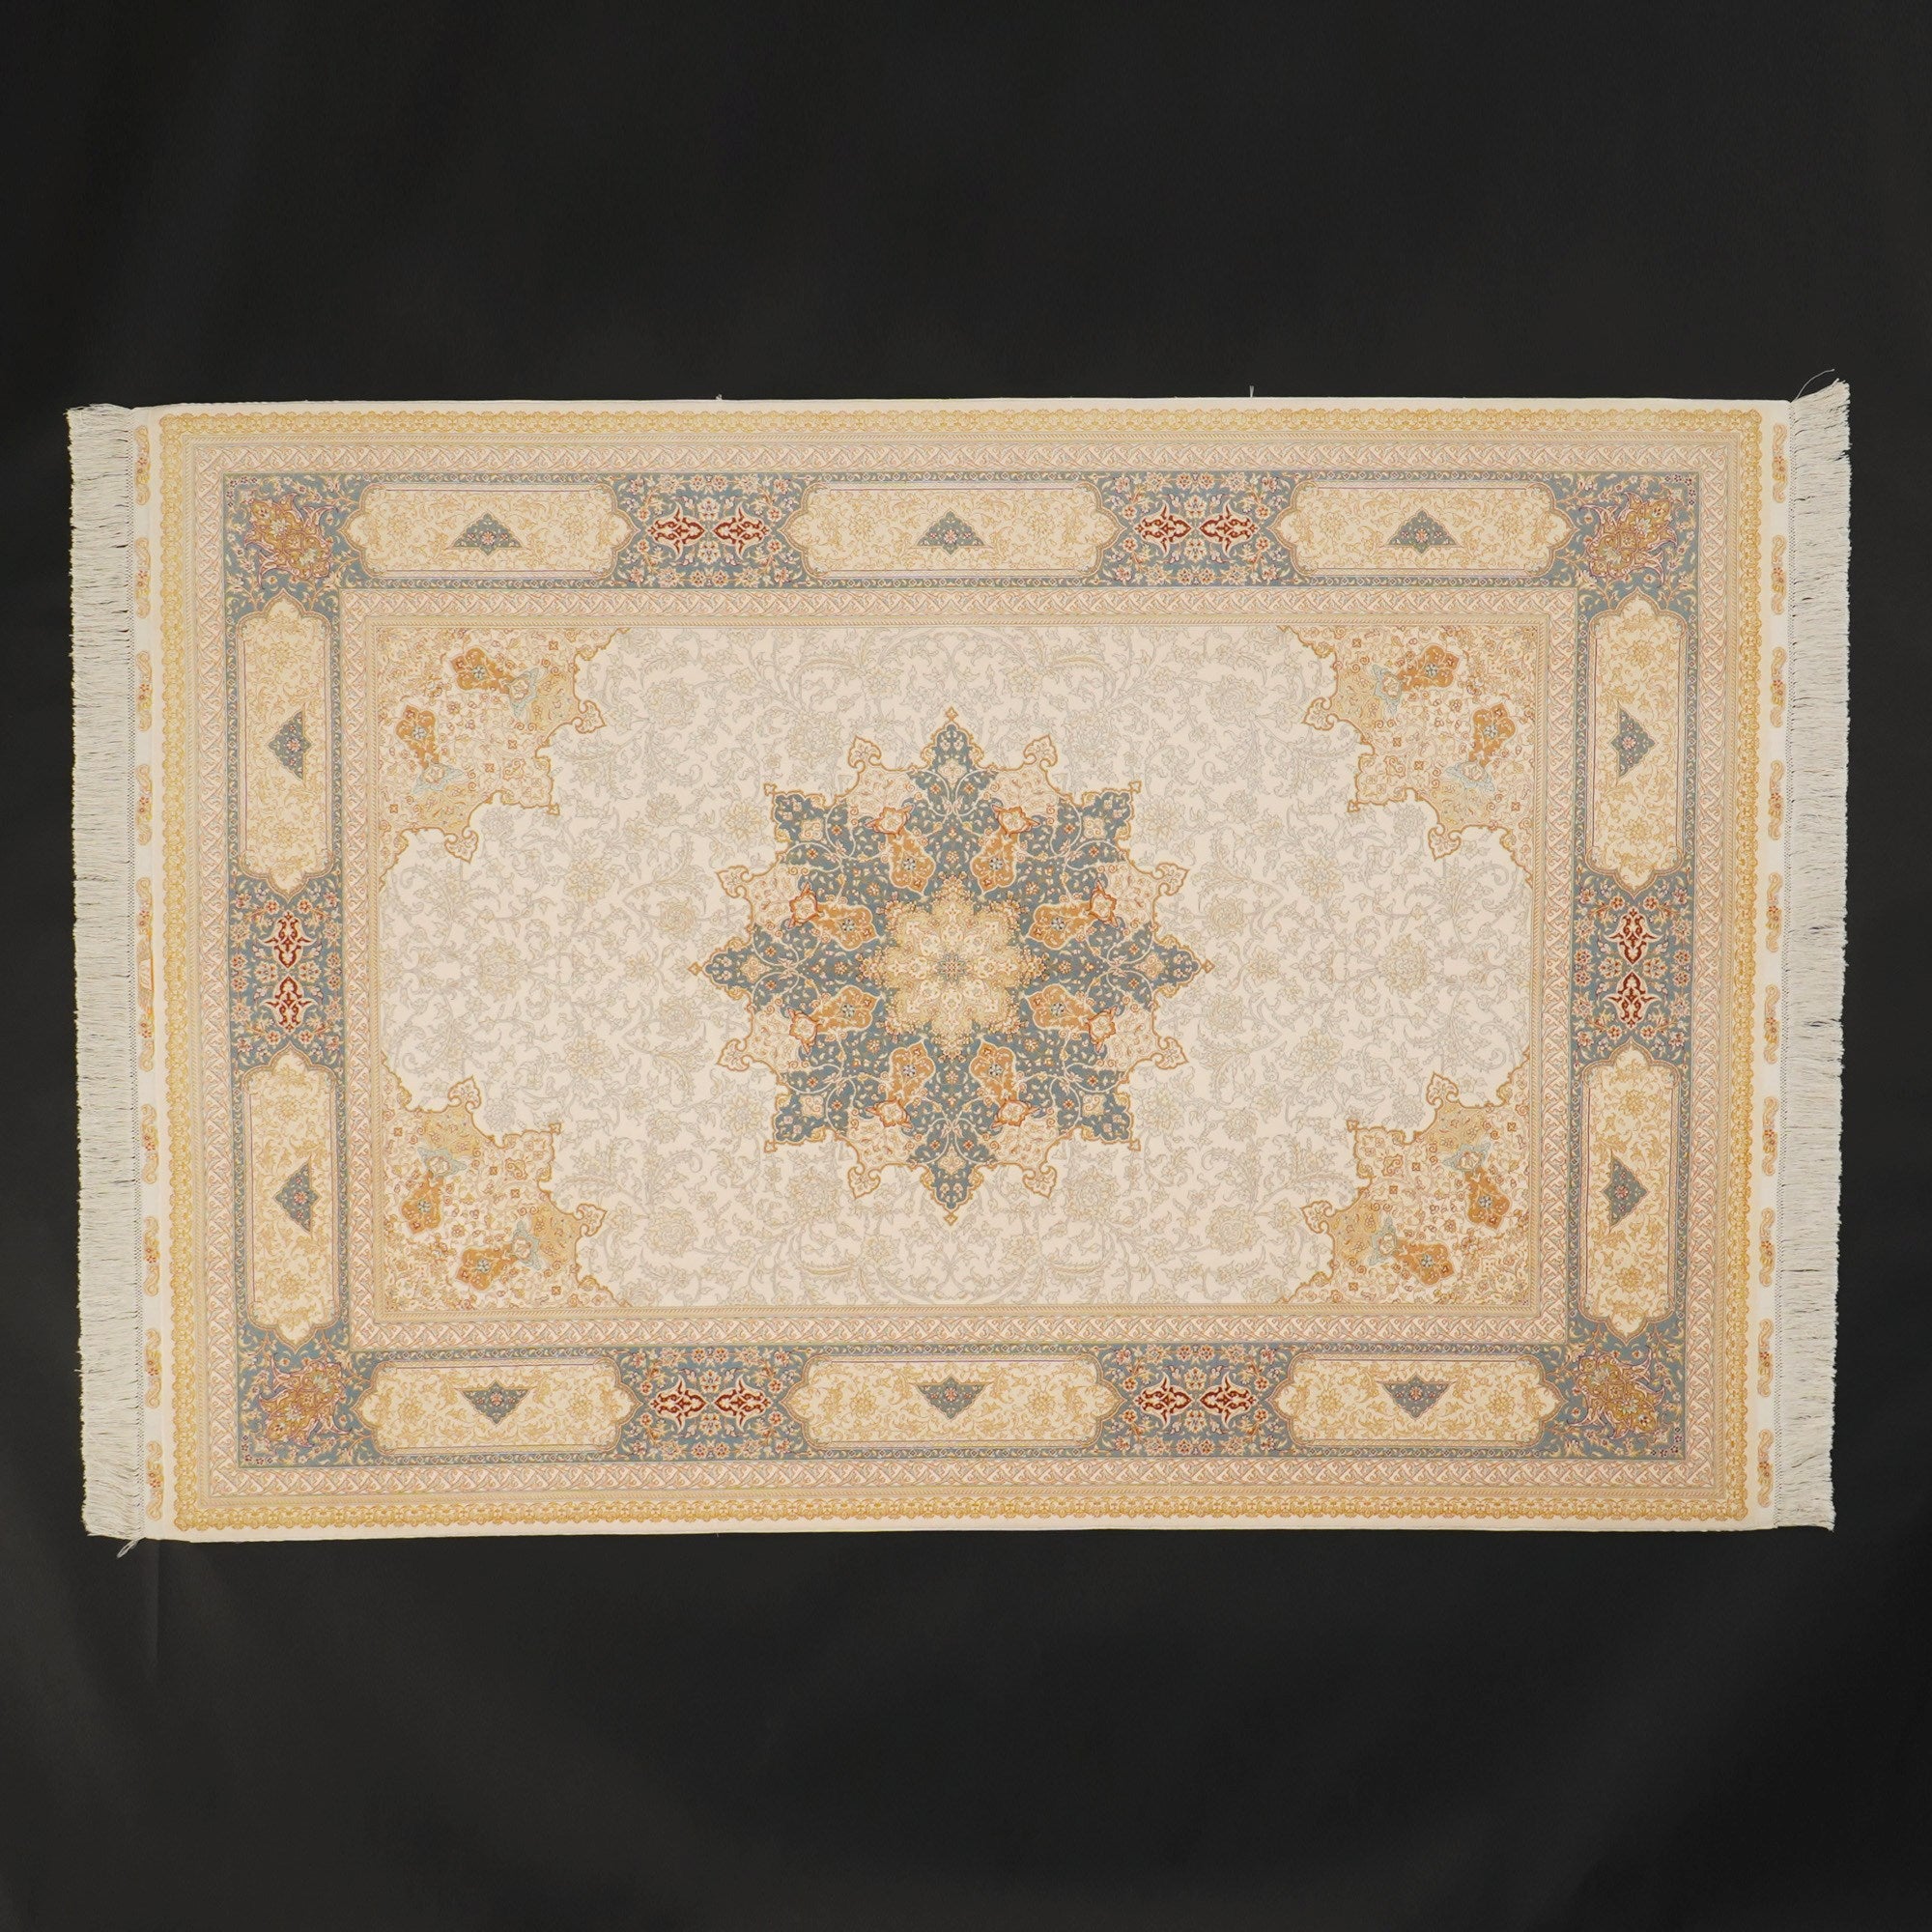 Zâde Series Frame Patterned Cream Hand-Woven Carpet